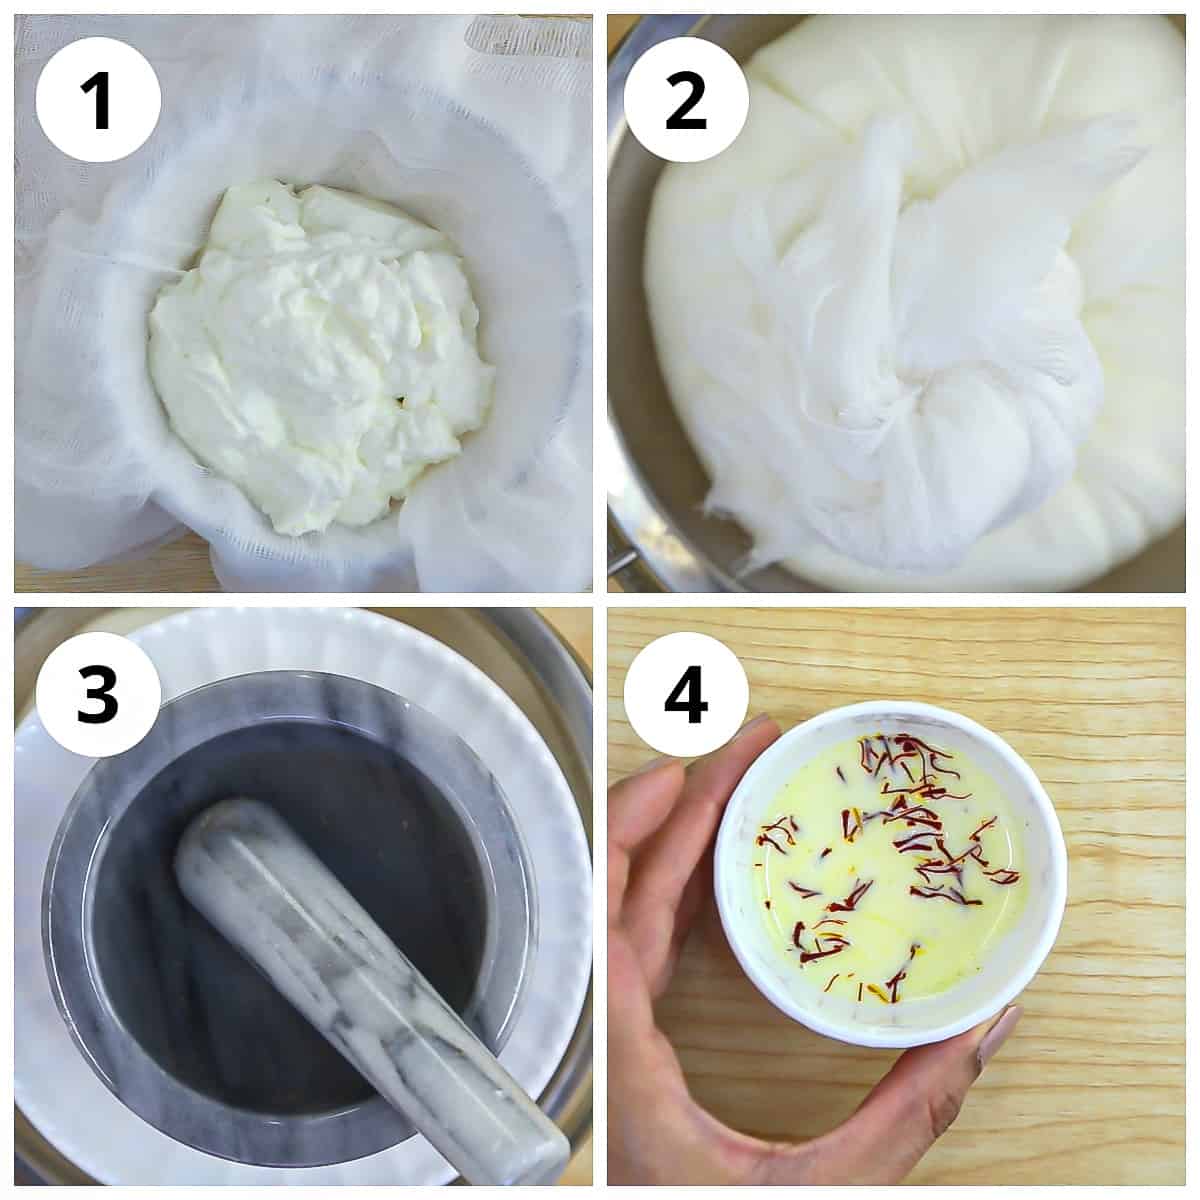 Steps to make hung curd/ yogurt (chakka)